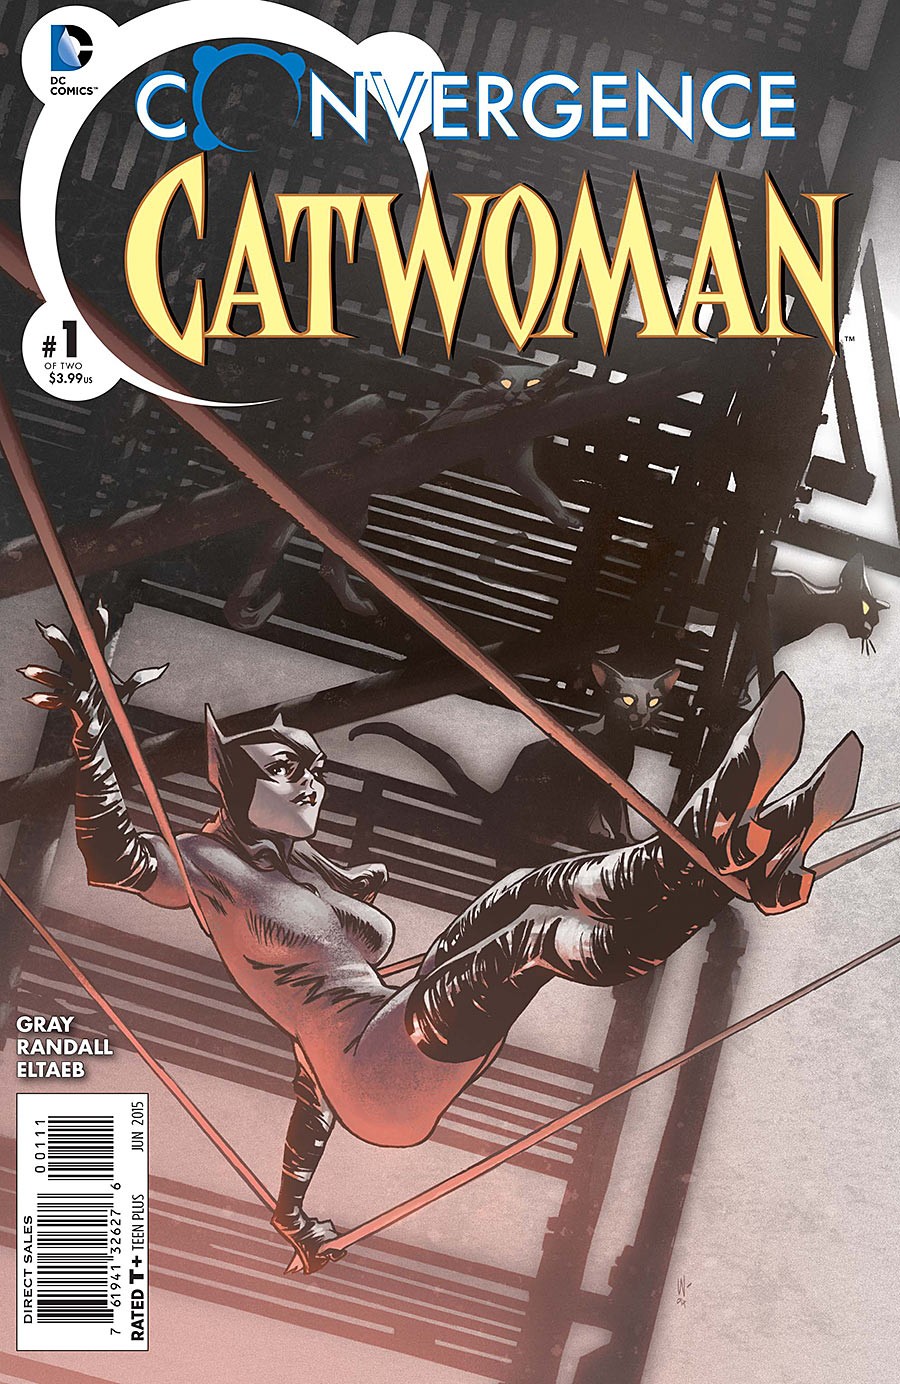 Convergence: Catwoman Vol. 1 #1